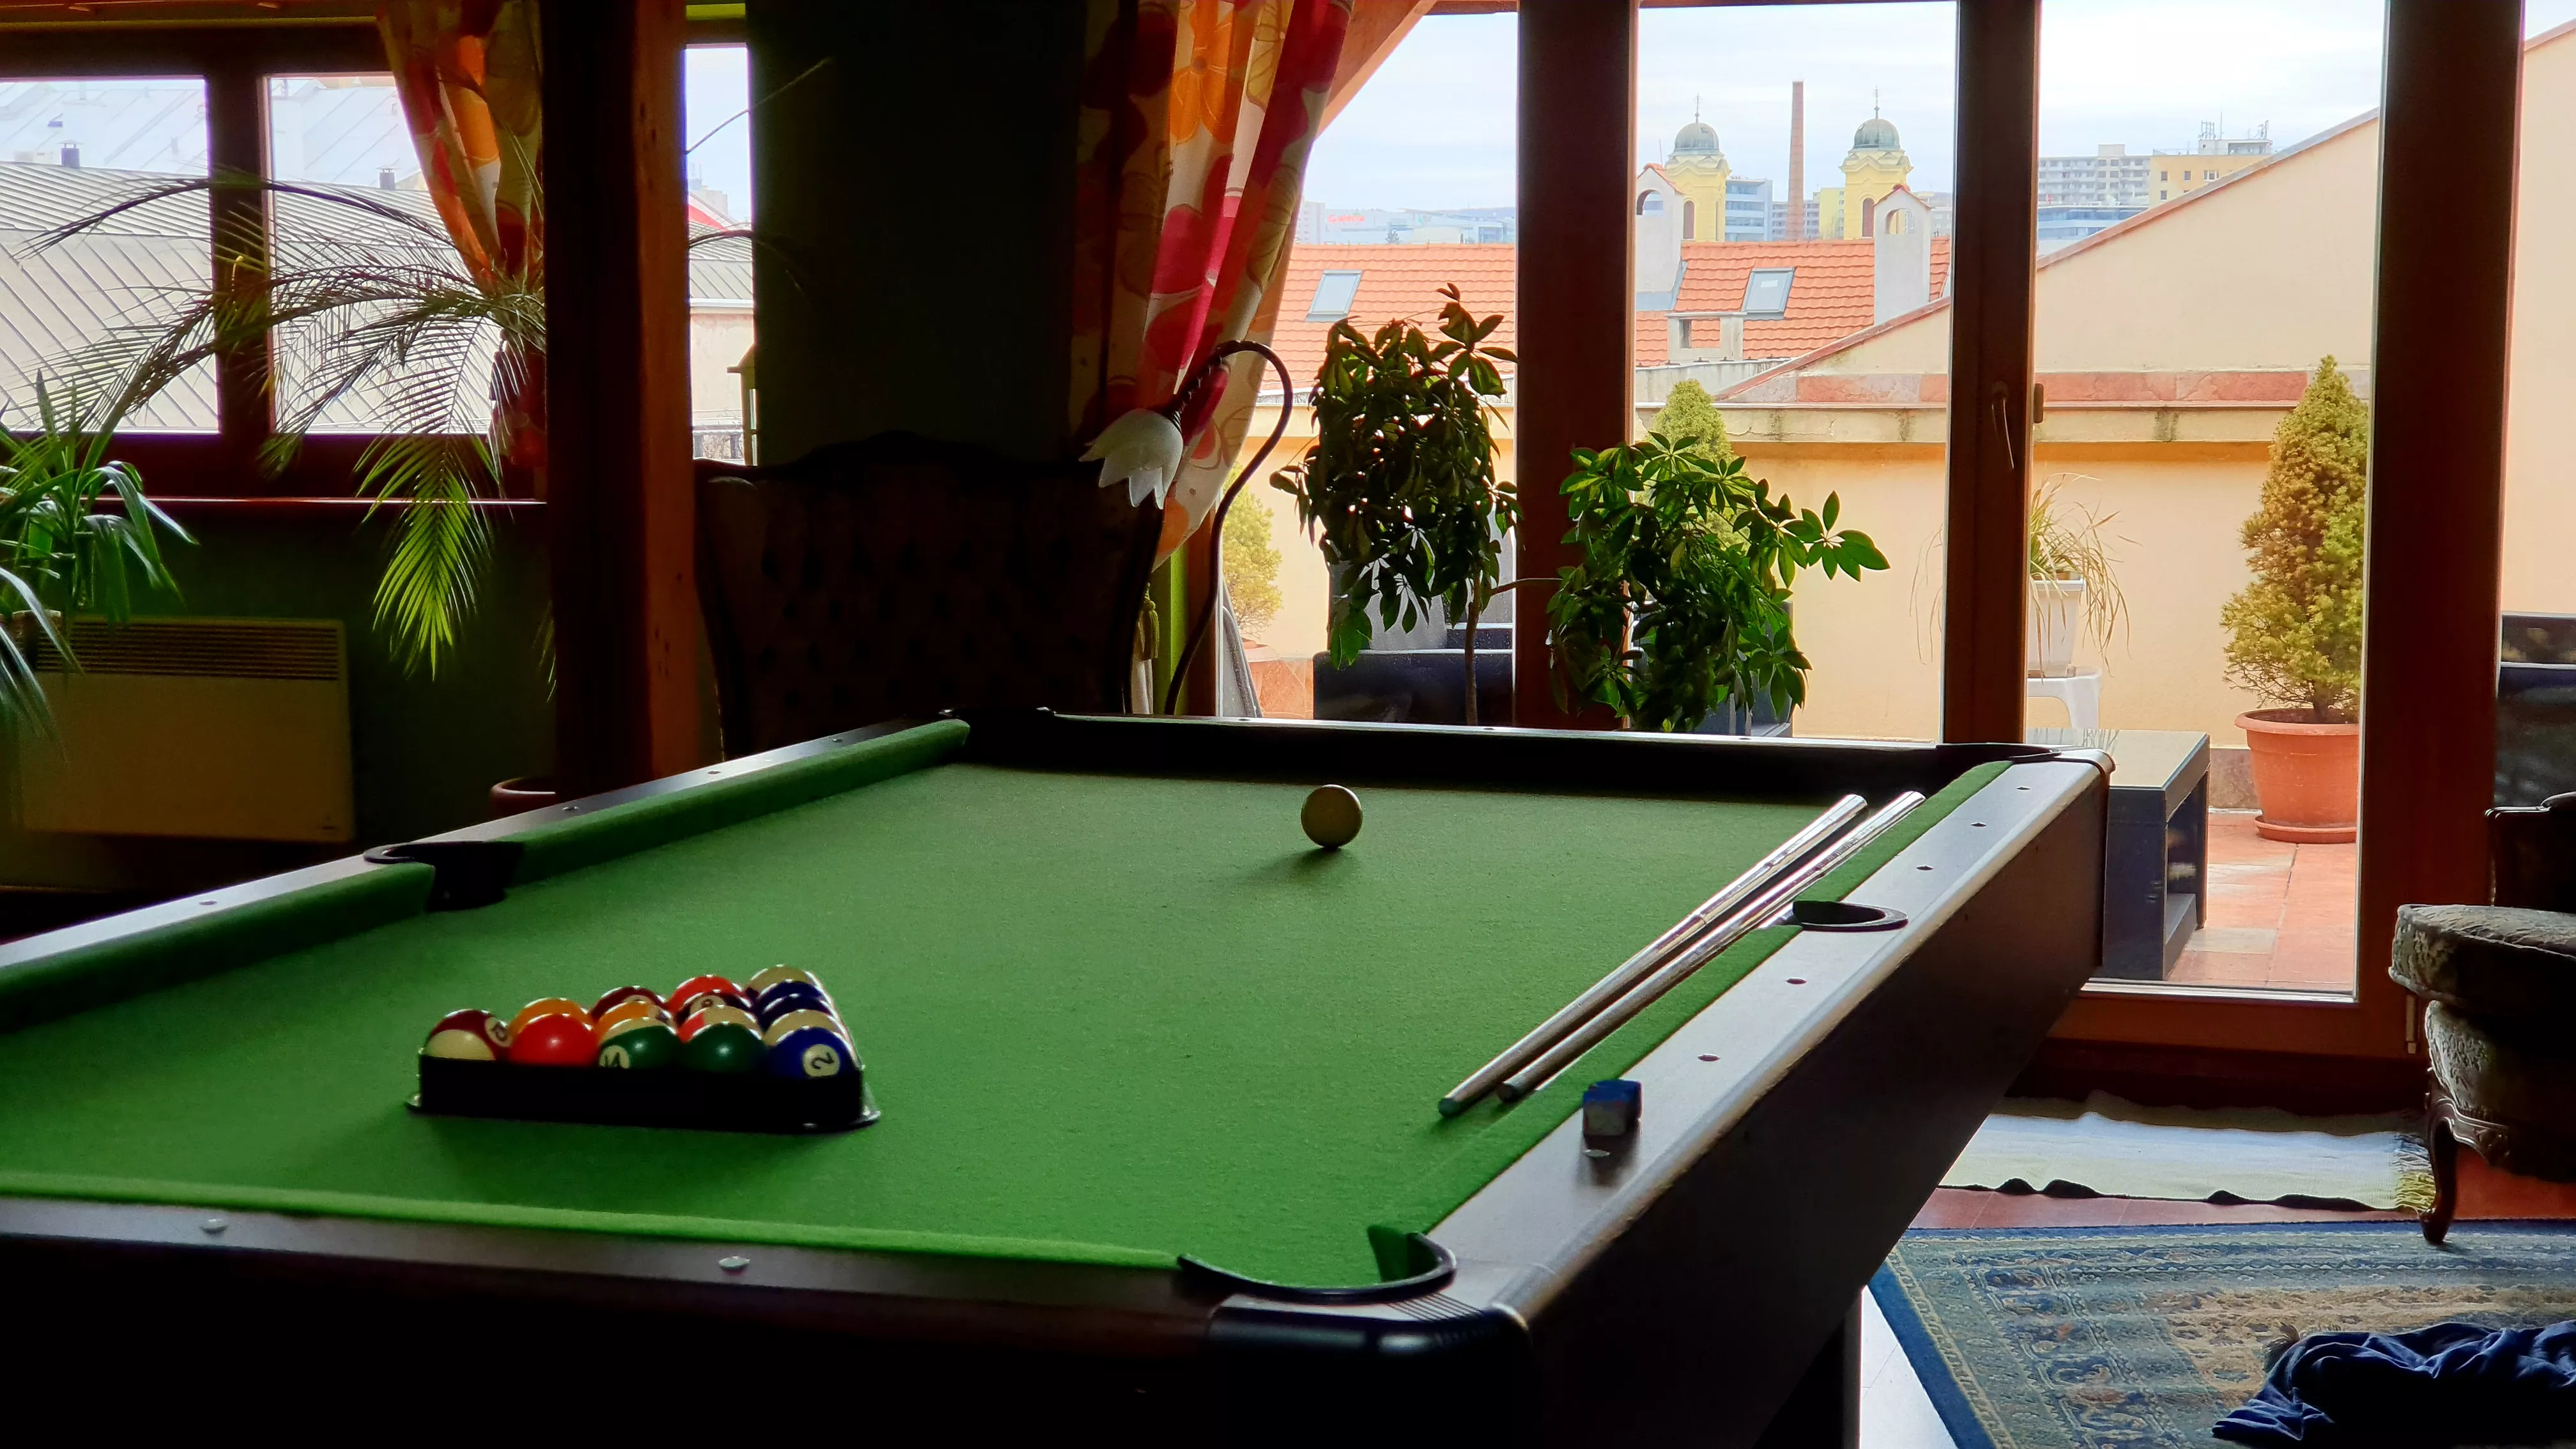 Sborovna in Czech Republic, Europe | Restaurants,Billiards - Rated 3.5